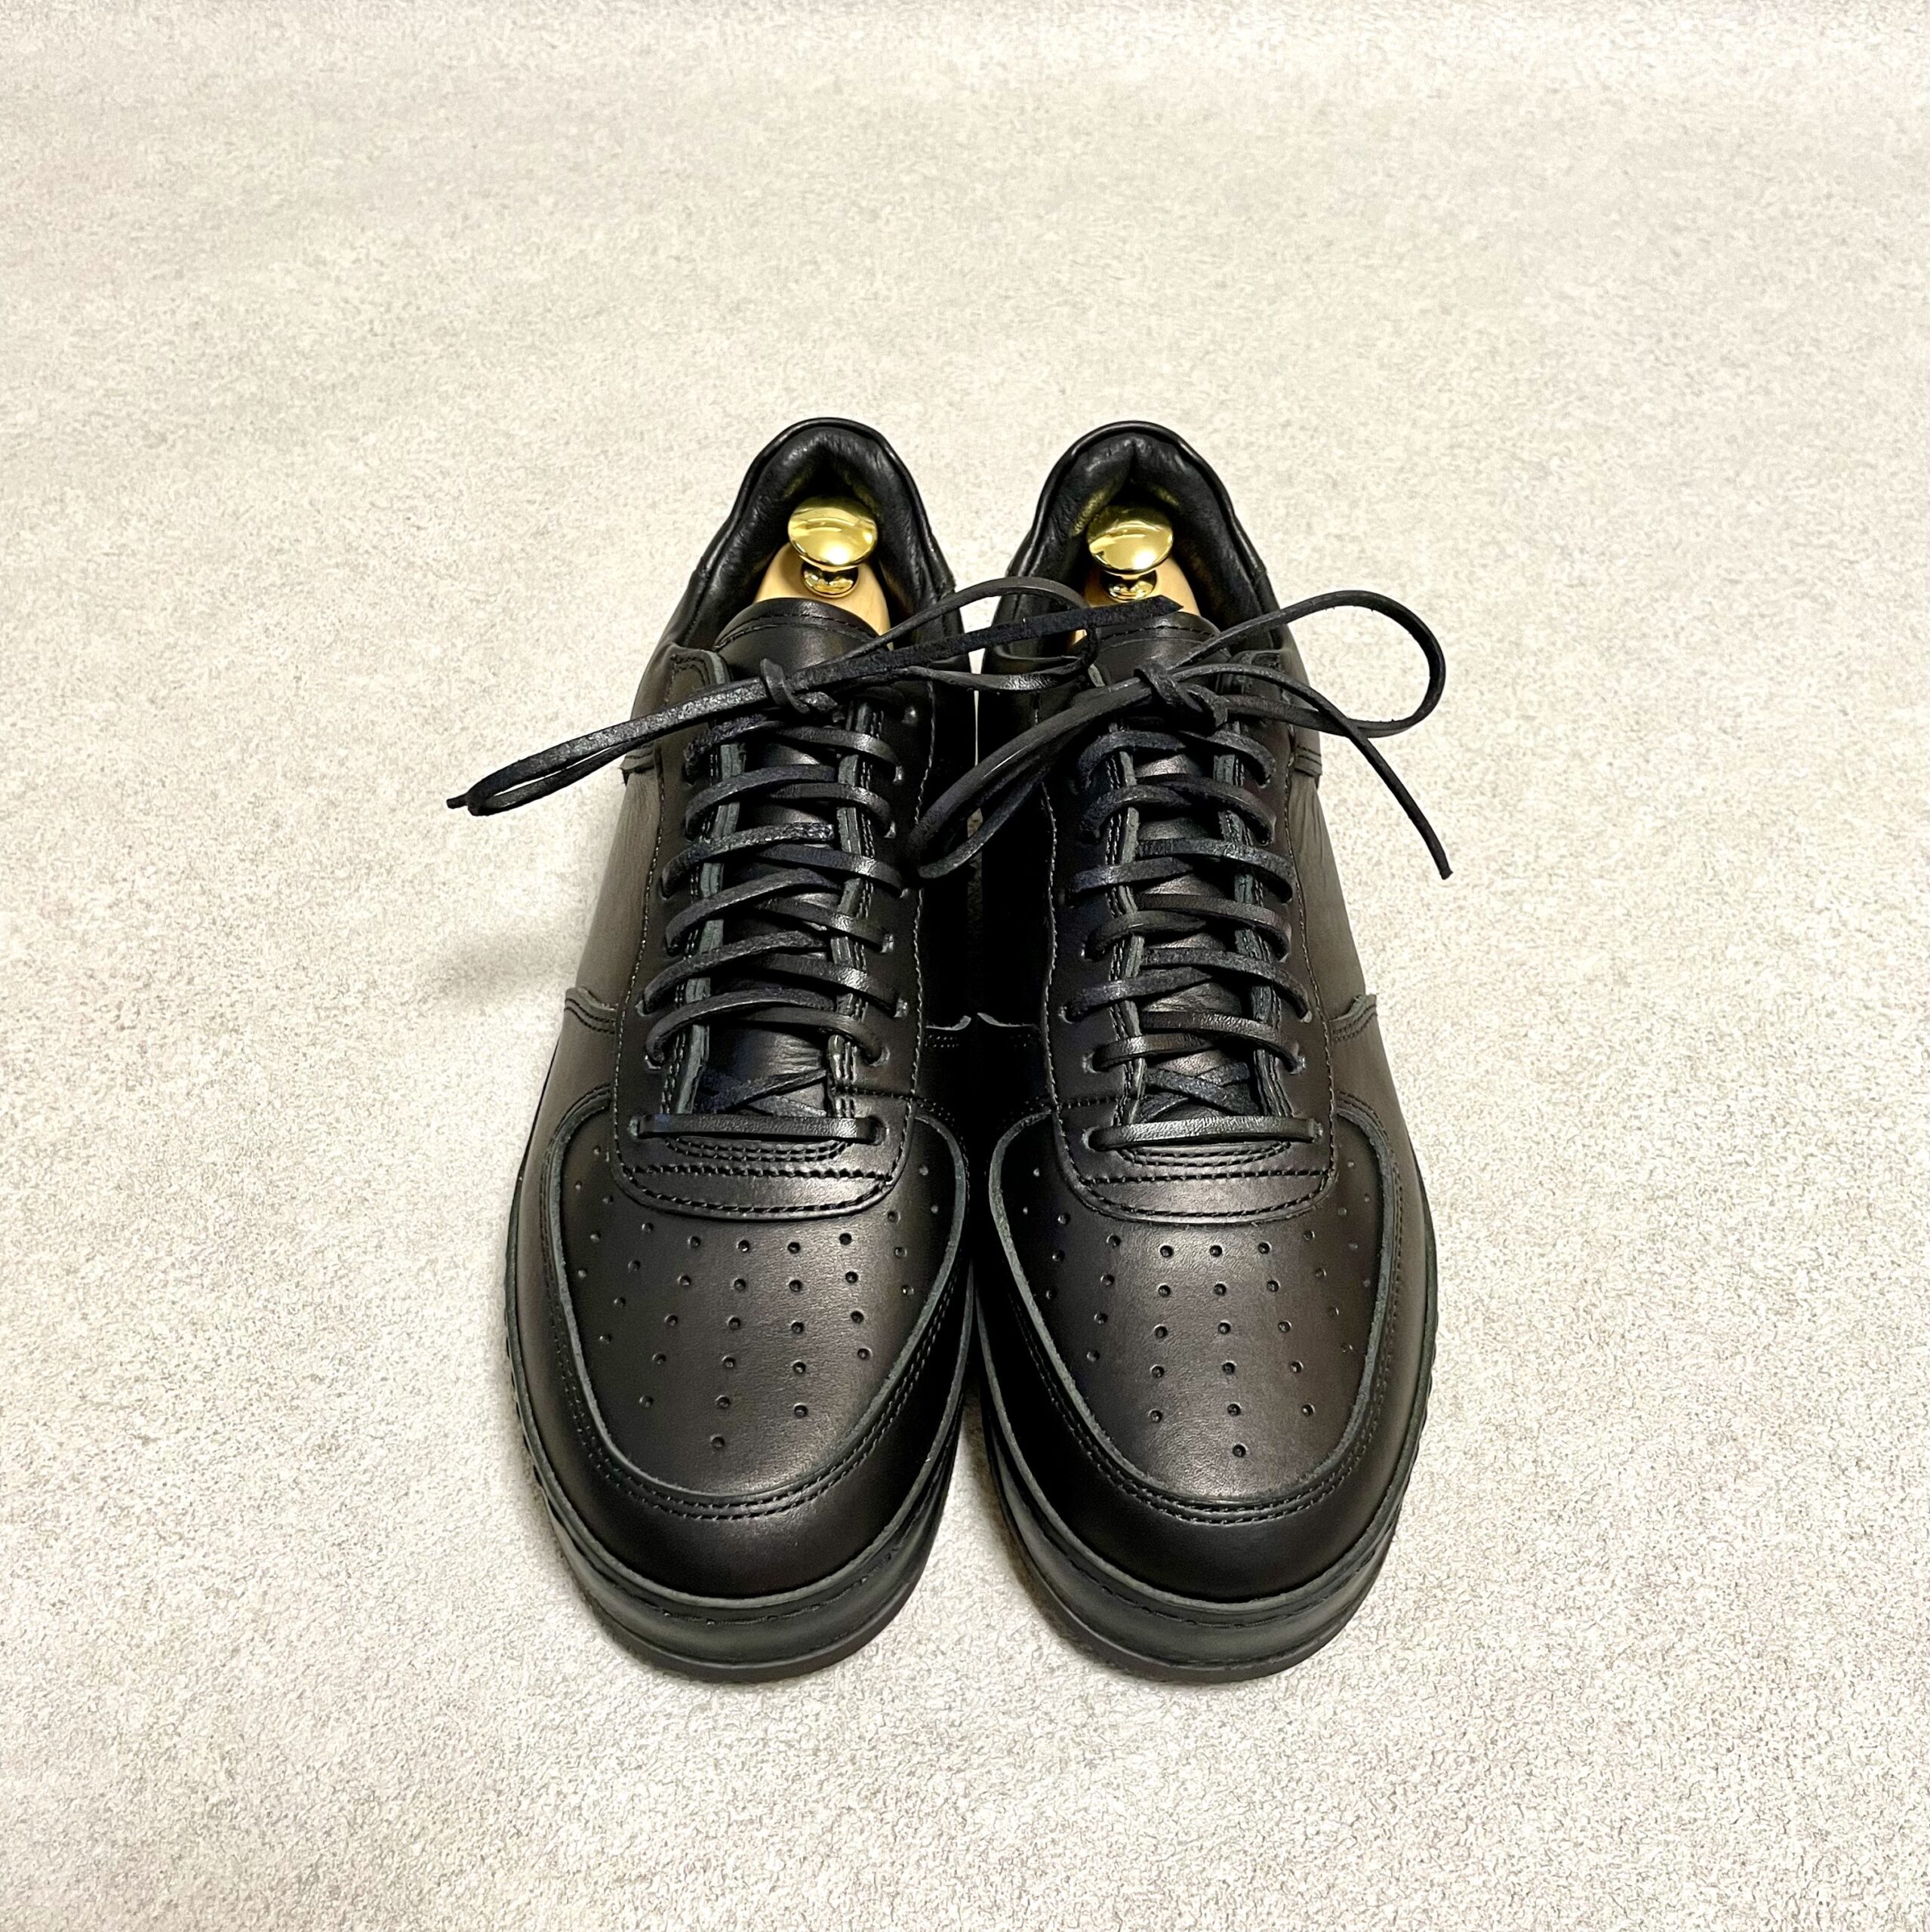 Hender Scheme エンダースキーマ homage leather sneakers オマージュレザーハイカットスニーカー AF1型 ブラウン